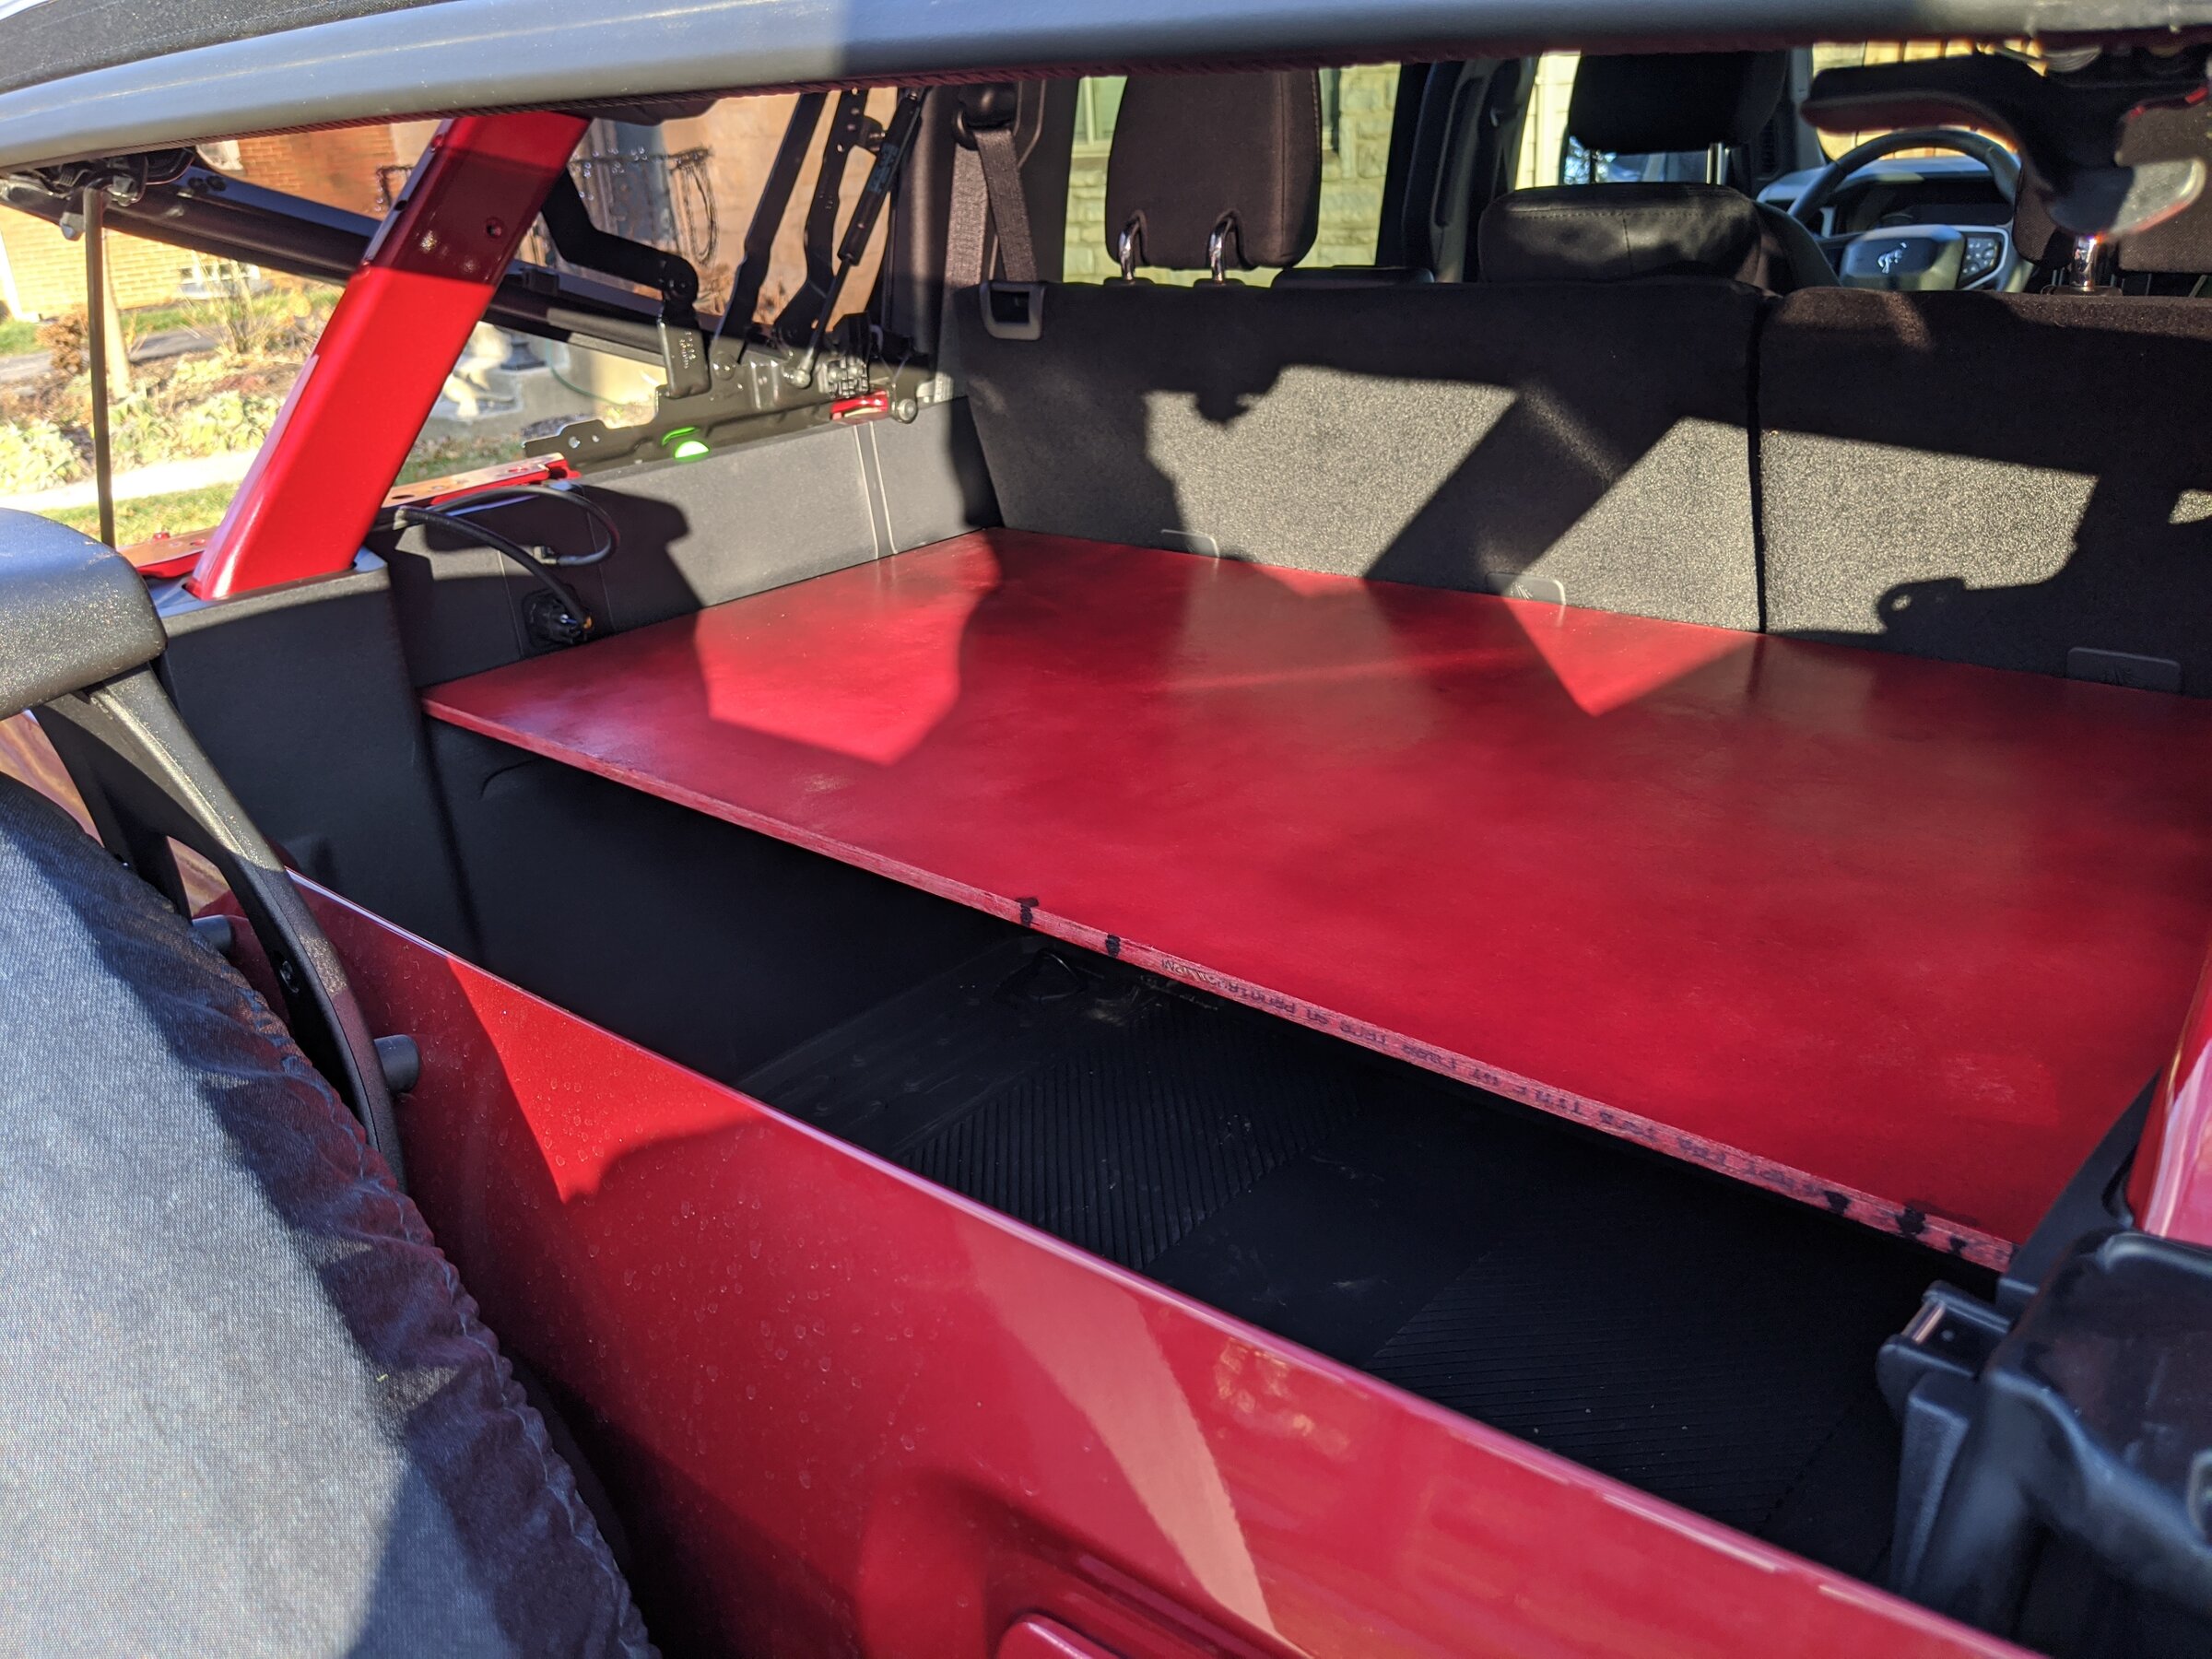 Ford Bronco [DIY] $28 trunk storage shelf for 4 door Broncos. No cutting required. 440F1C18-6F9E-41C5-9F5C-EE0613348DB7